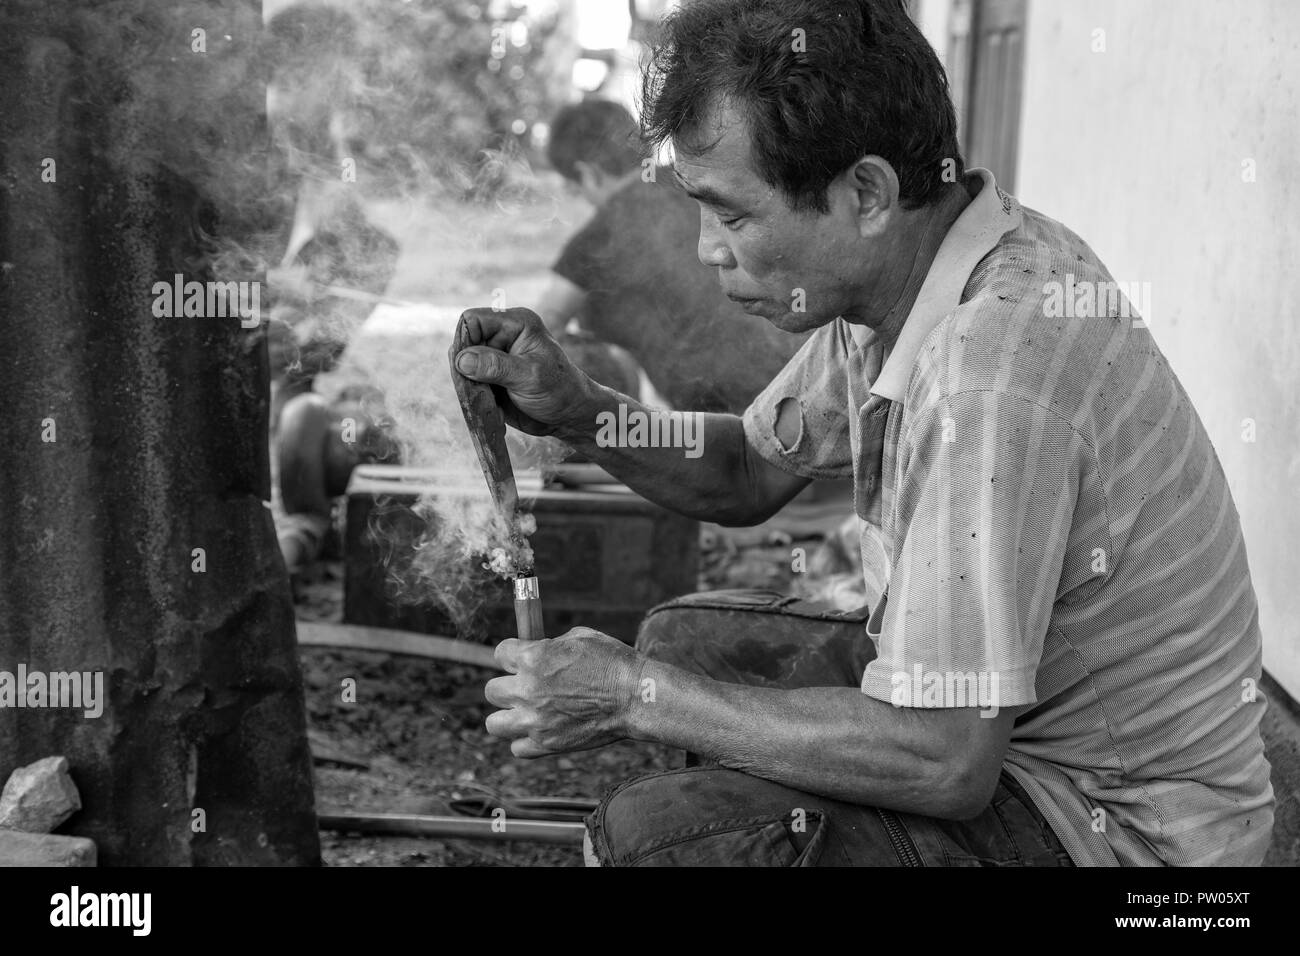 LUANG PRABANG, LAOS - OCTOBER 8: An unidentified man burns a hot knife tang into a handle at a local village forge in Luang Prabang, Laos on October 8 Stock Photo